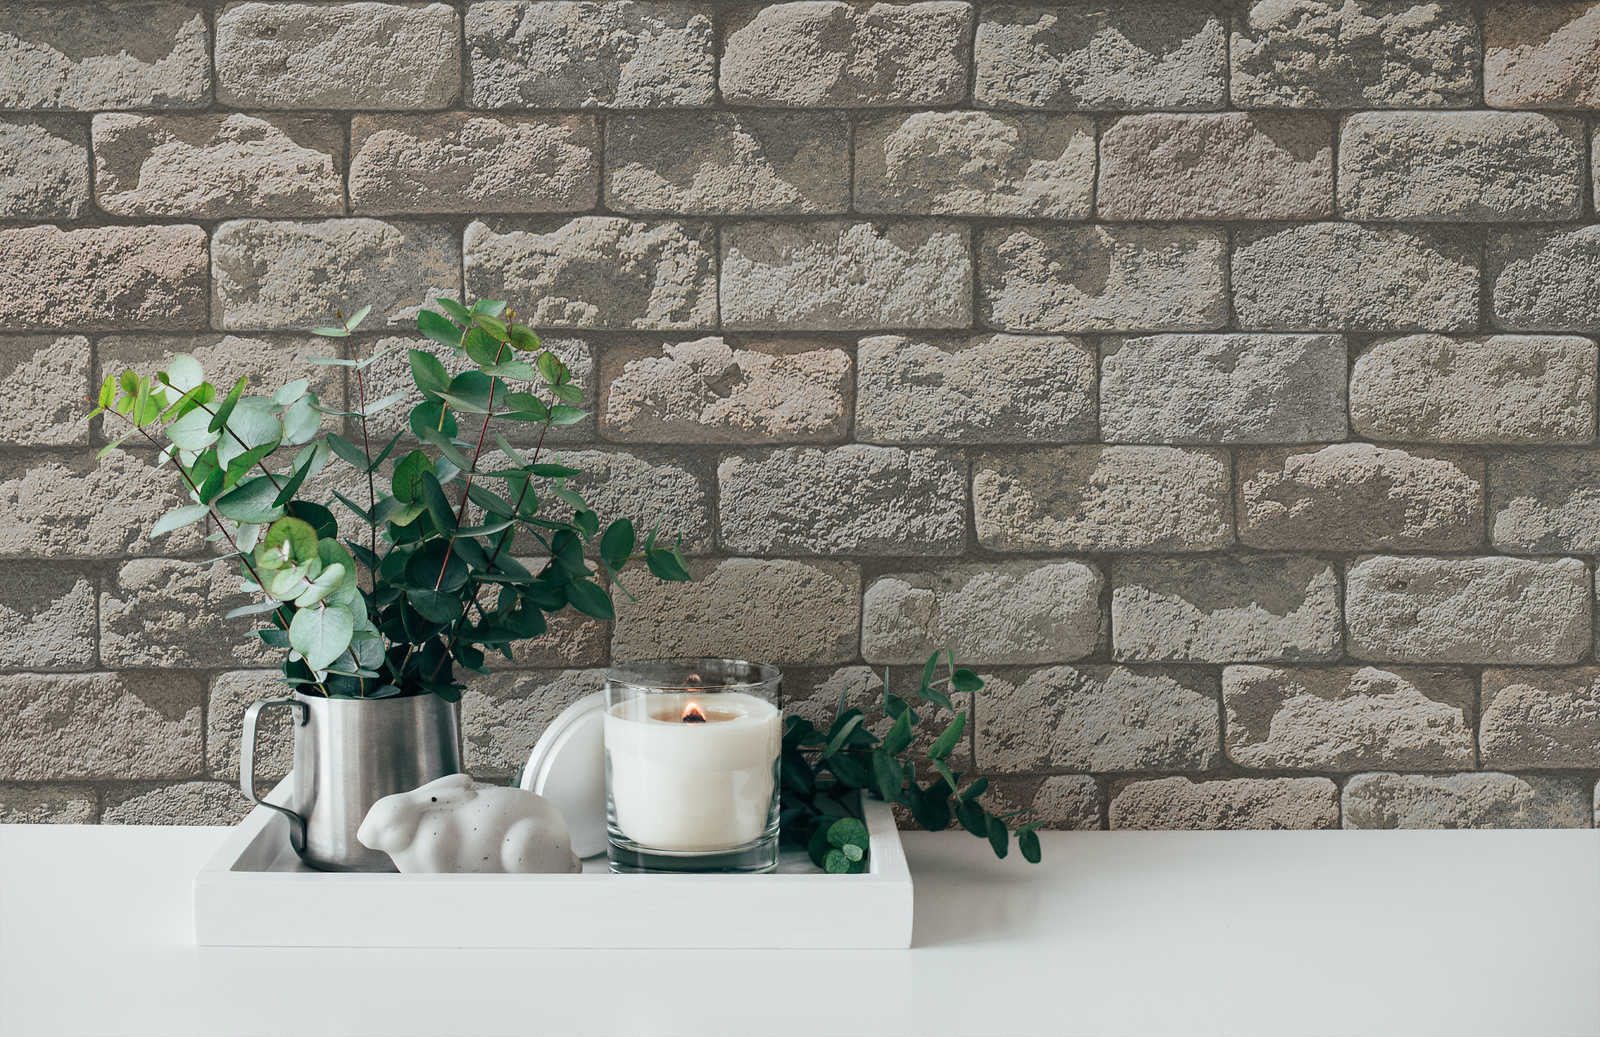             Stone wallpaper with masonry, shadows & 3D look - beige, cream
        